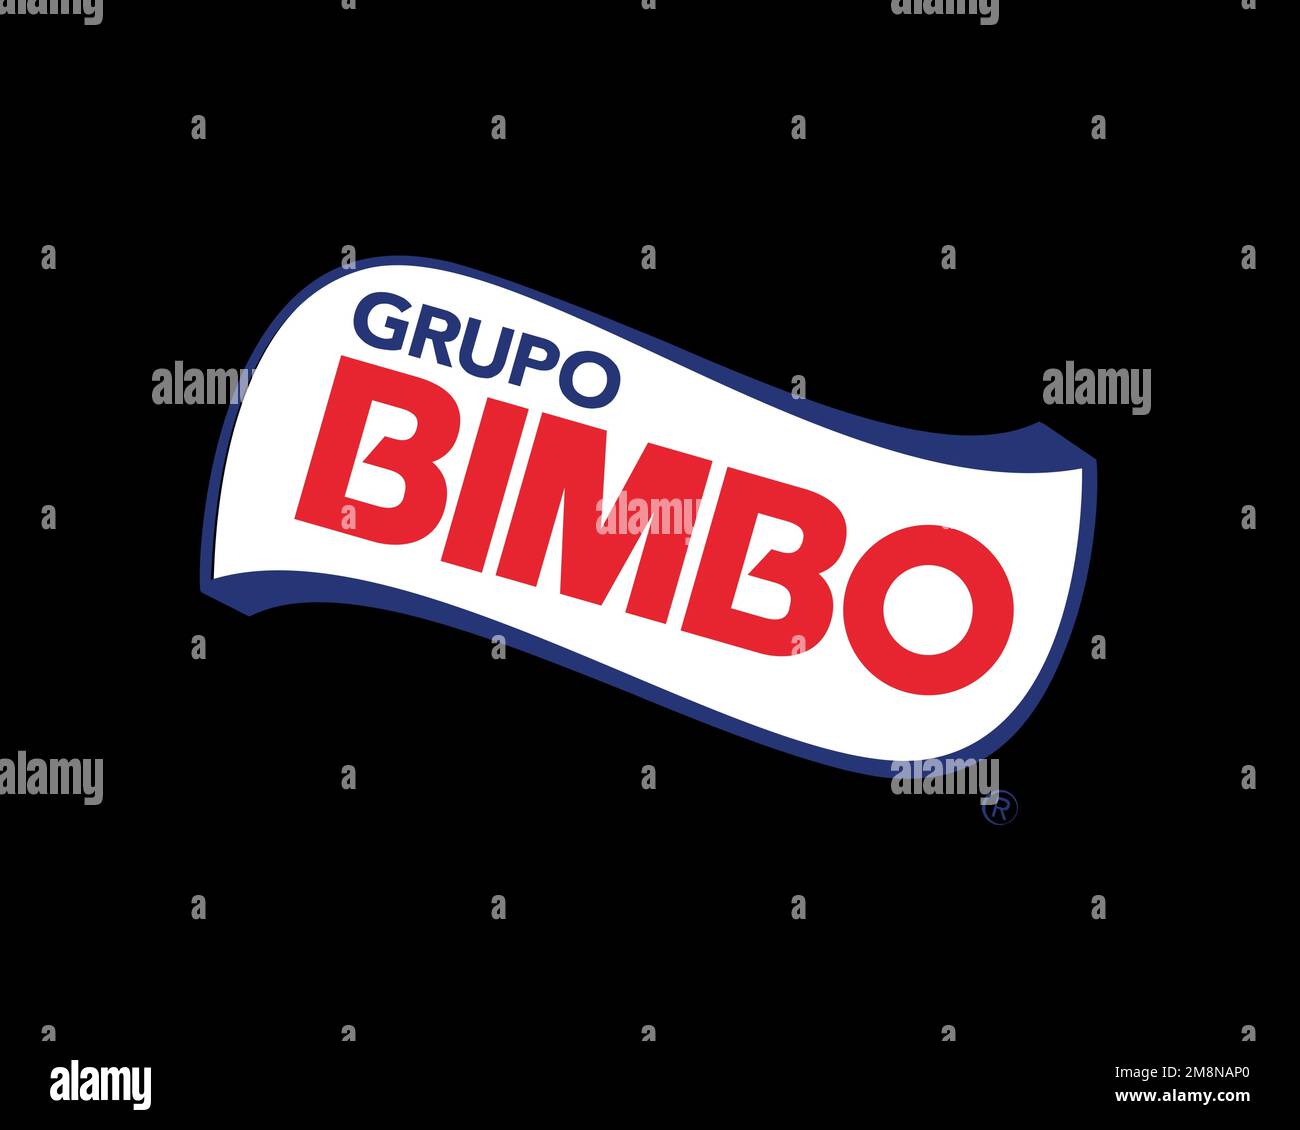 Grupo Bimbo, logo ruotato, sfondo nero B Foto stock - Alamy